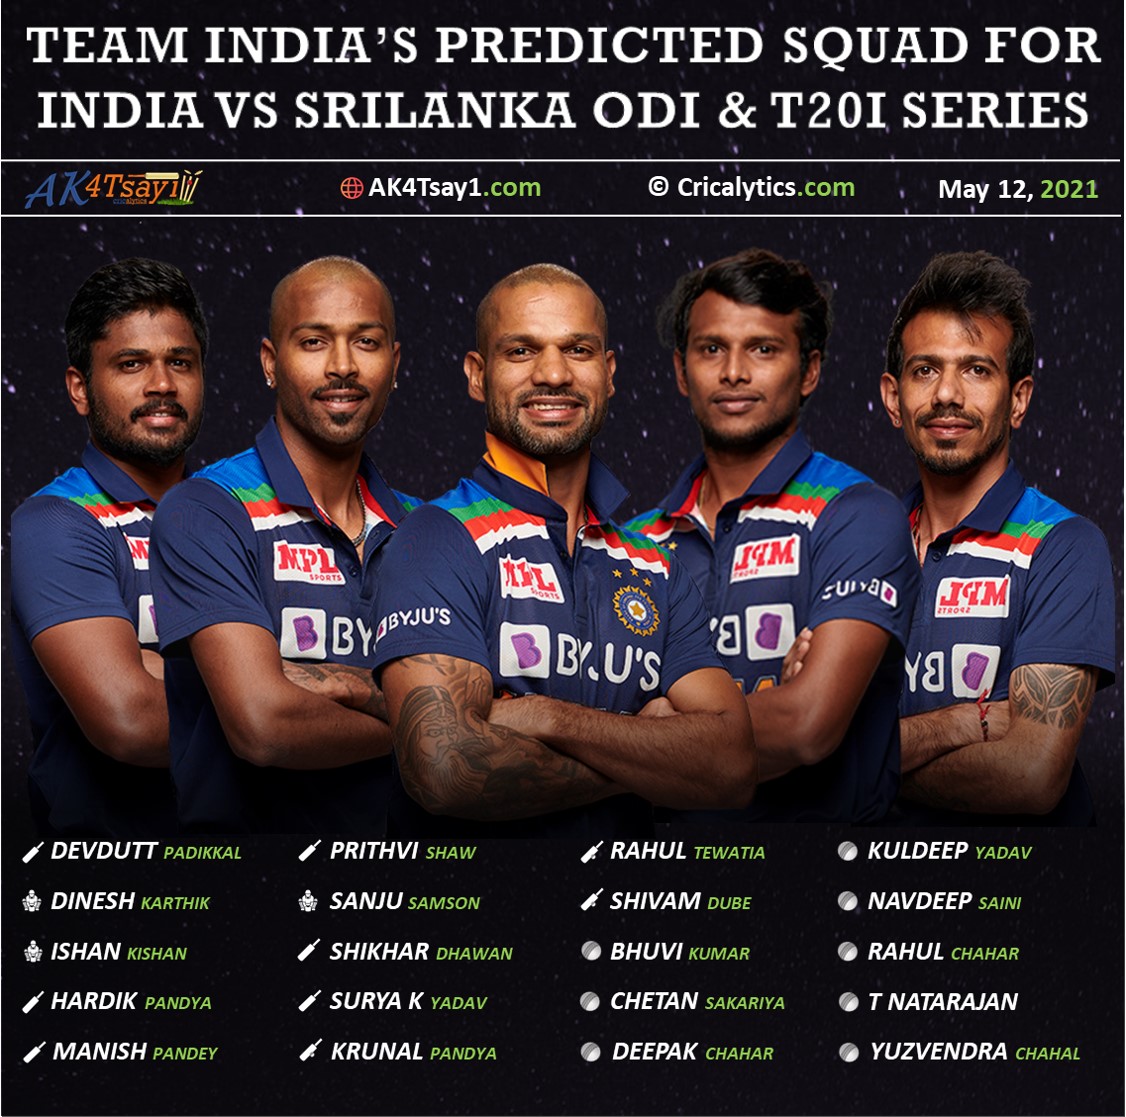 India vs SL 2021: Predicted Squad for Team India - Rahul Dravid as Coach